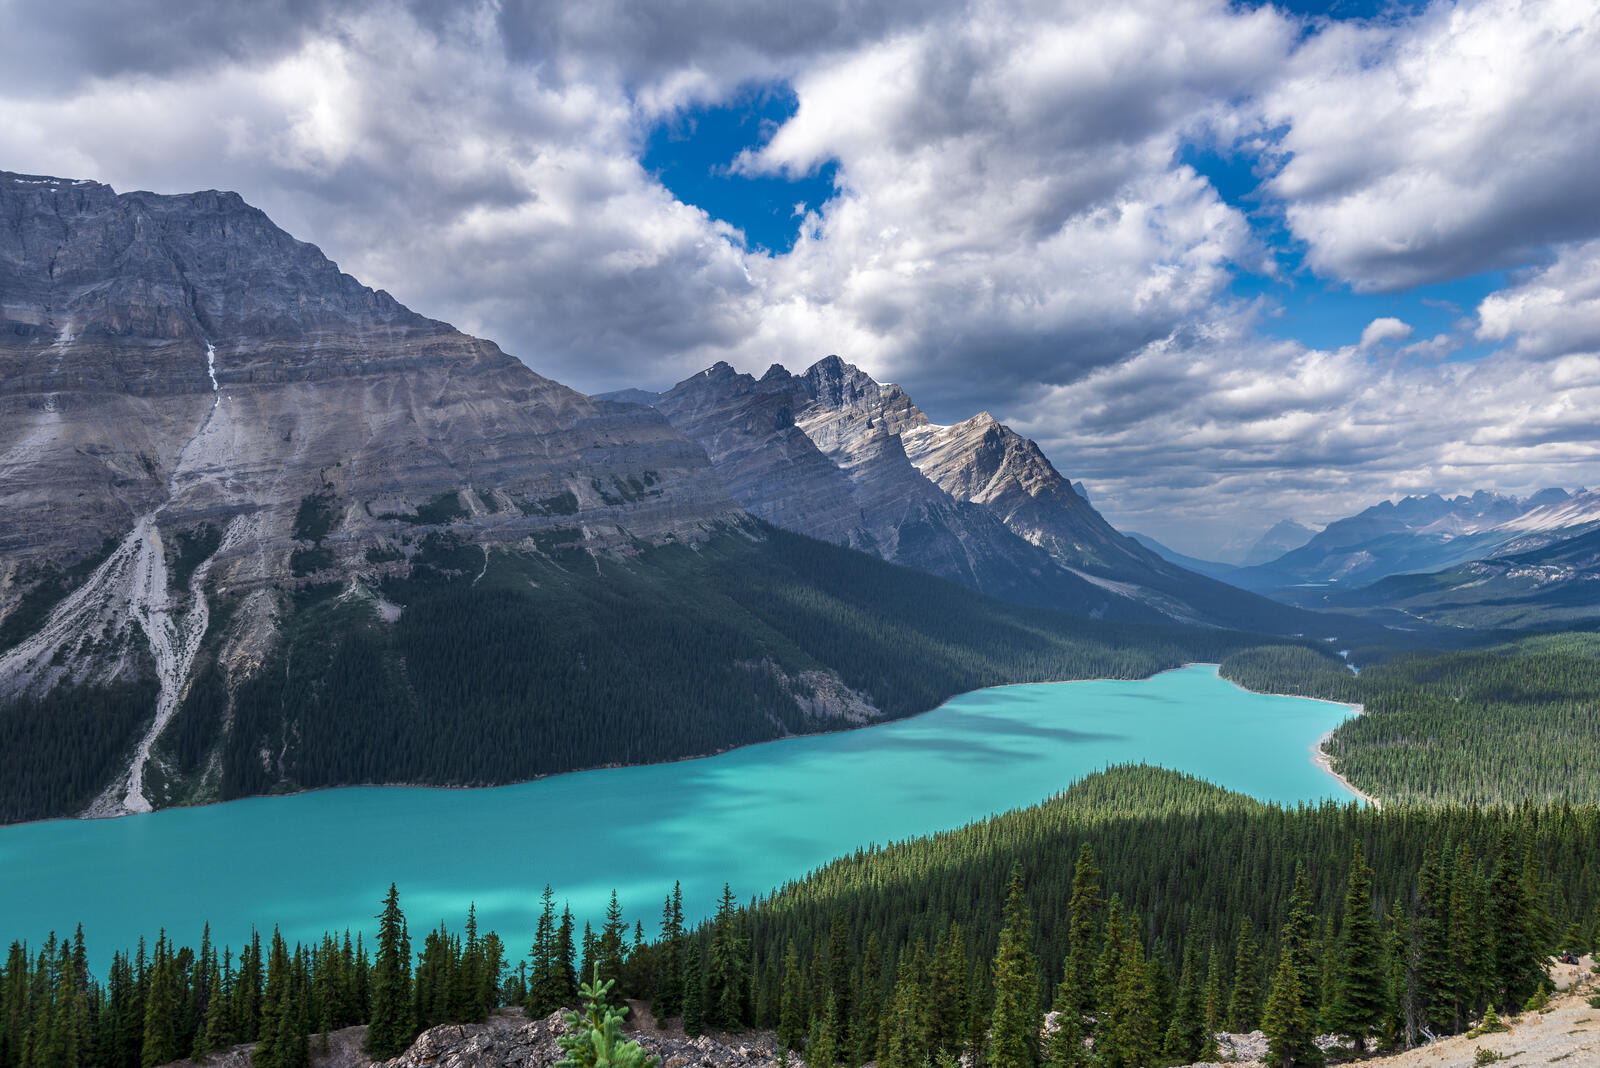 Wallpapers mountains Banff National Park landscape on the desktop